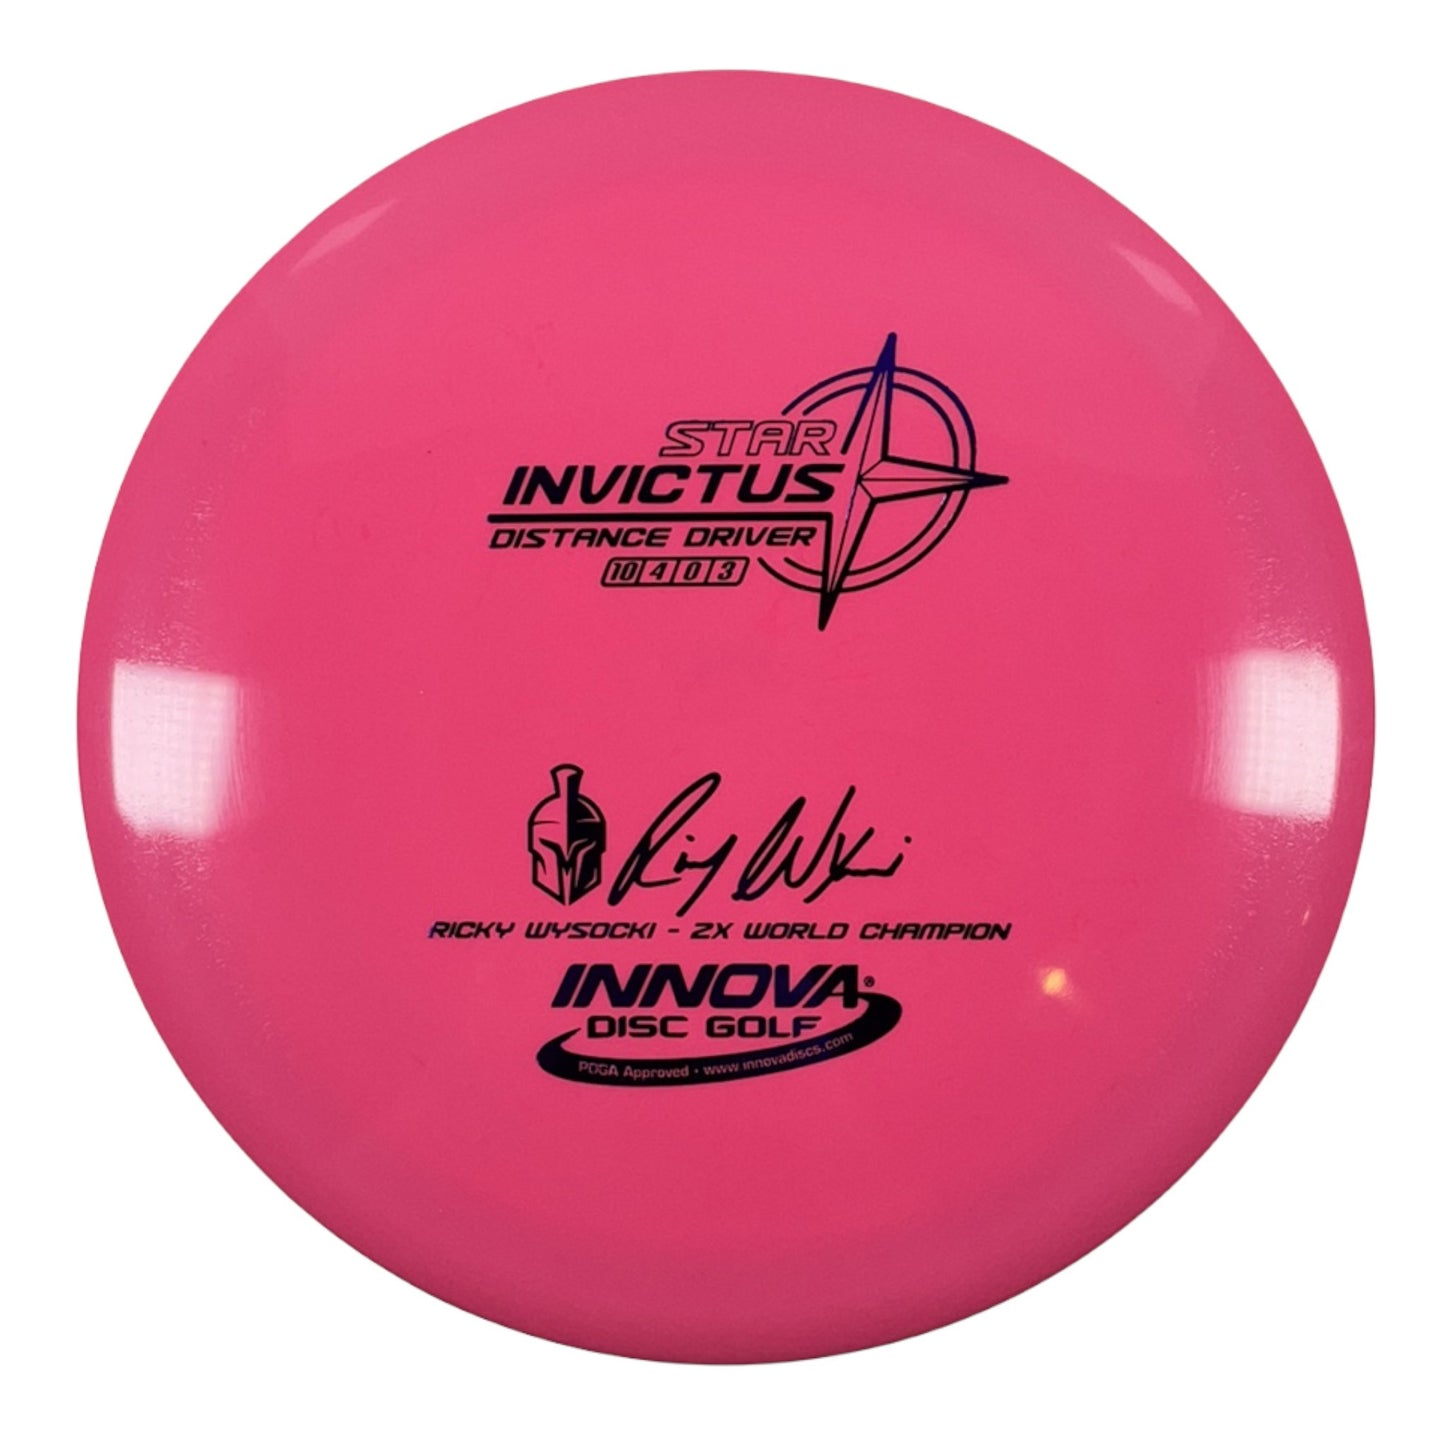 Innova Champion Discs Invictus | Star | Pink/Blue 173g-174g (Ricky Wysocki) Disc Golf